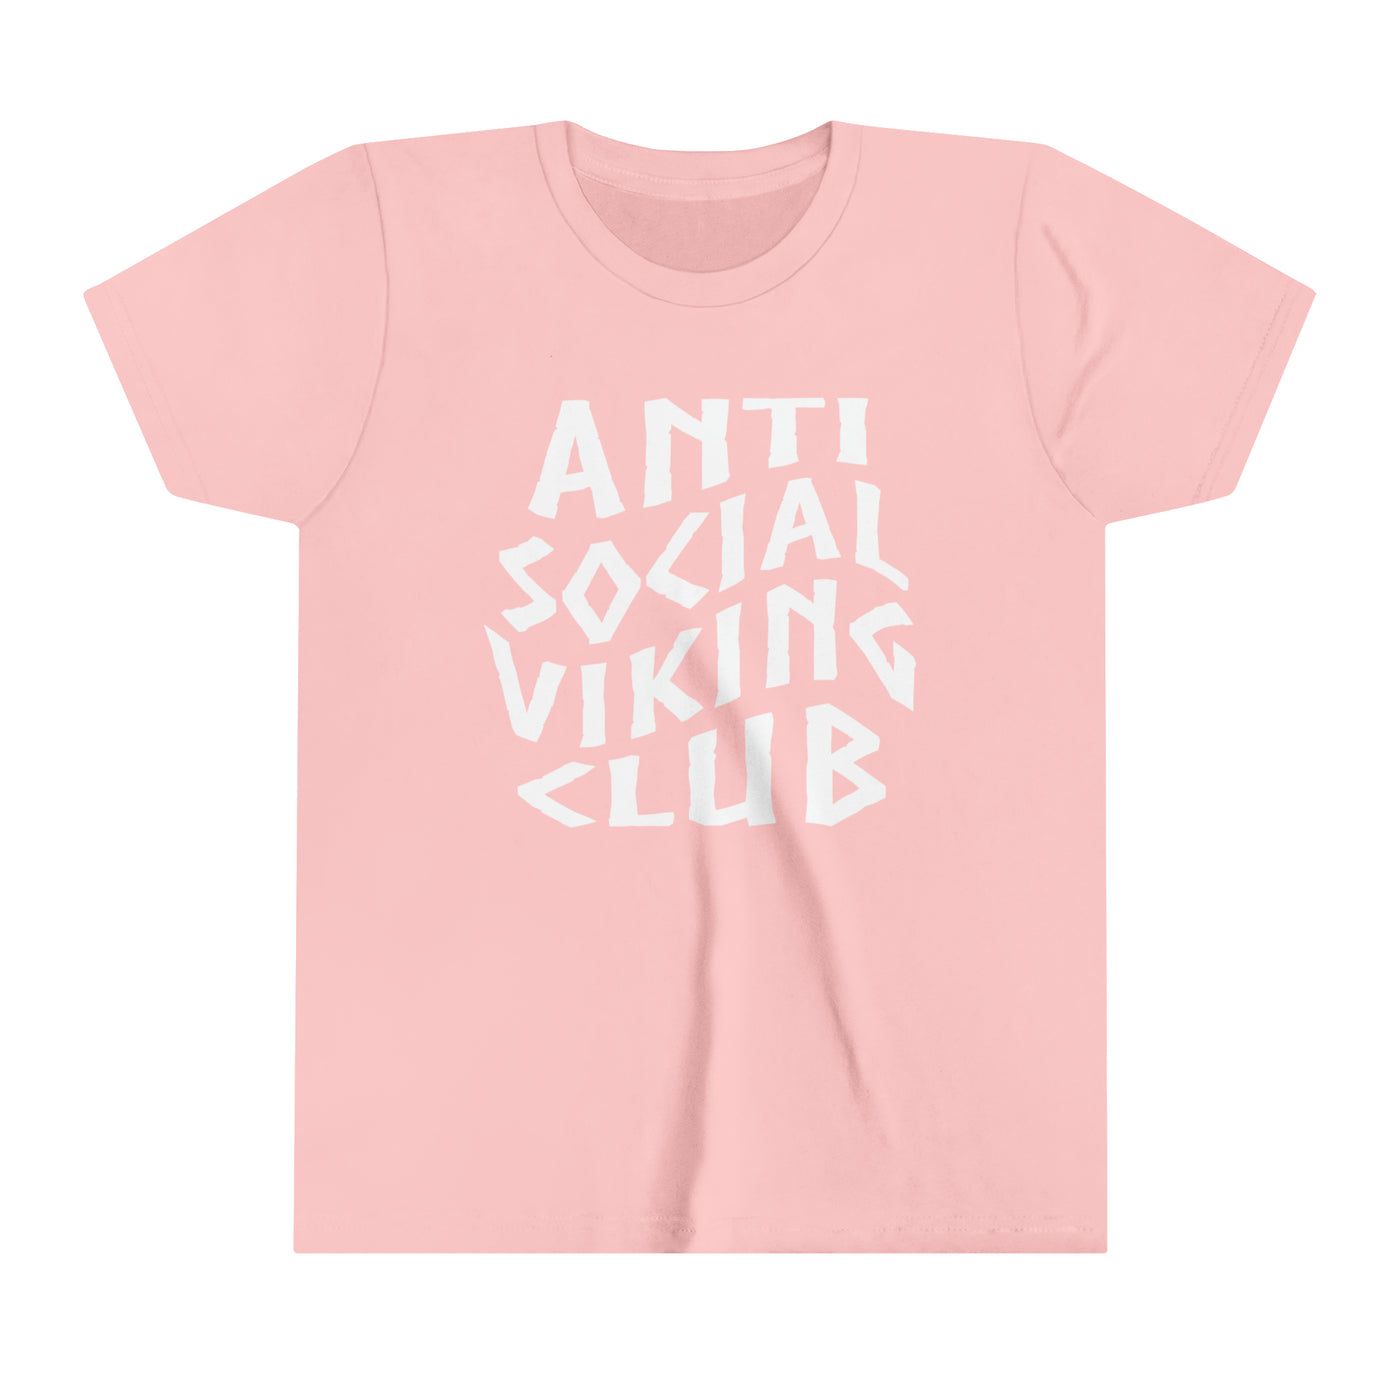 Anti Social Viking Club Kids T-Shirt